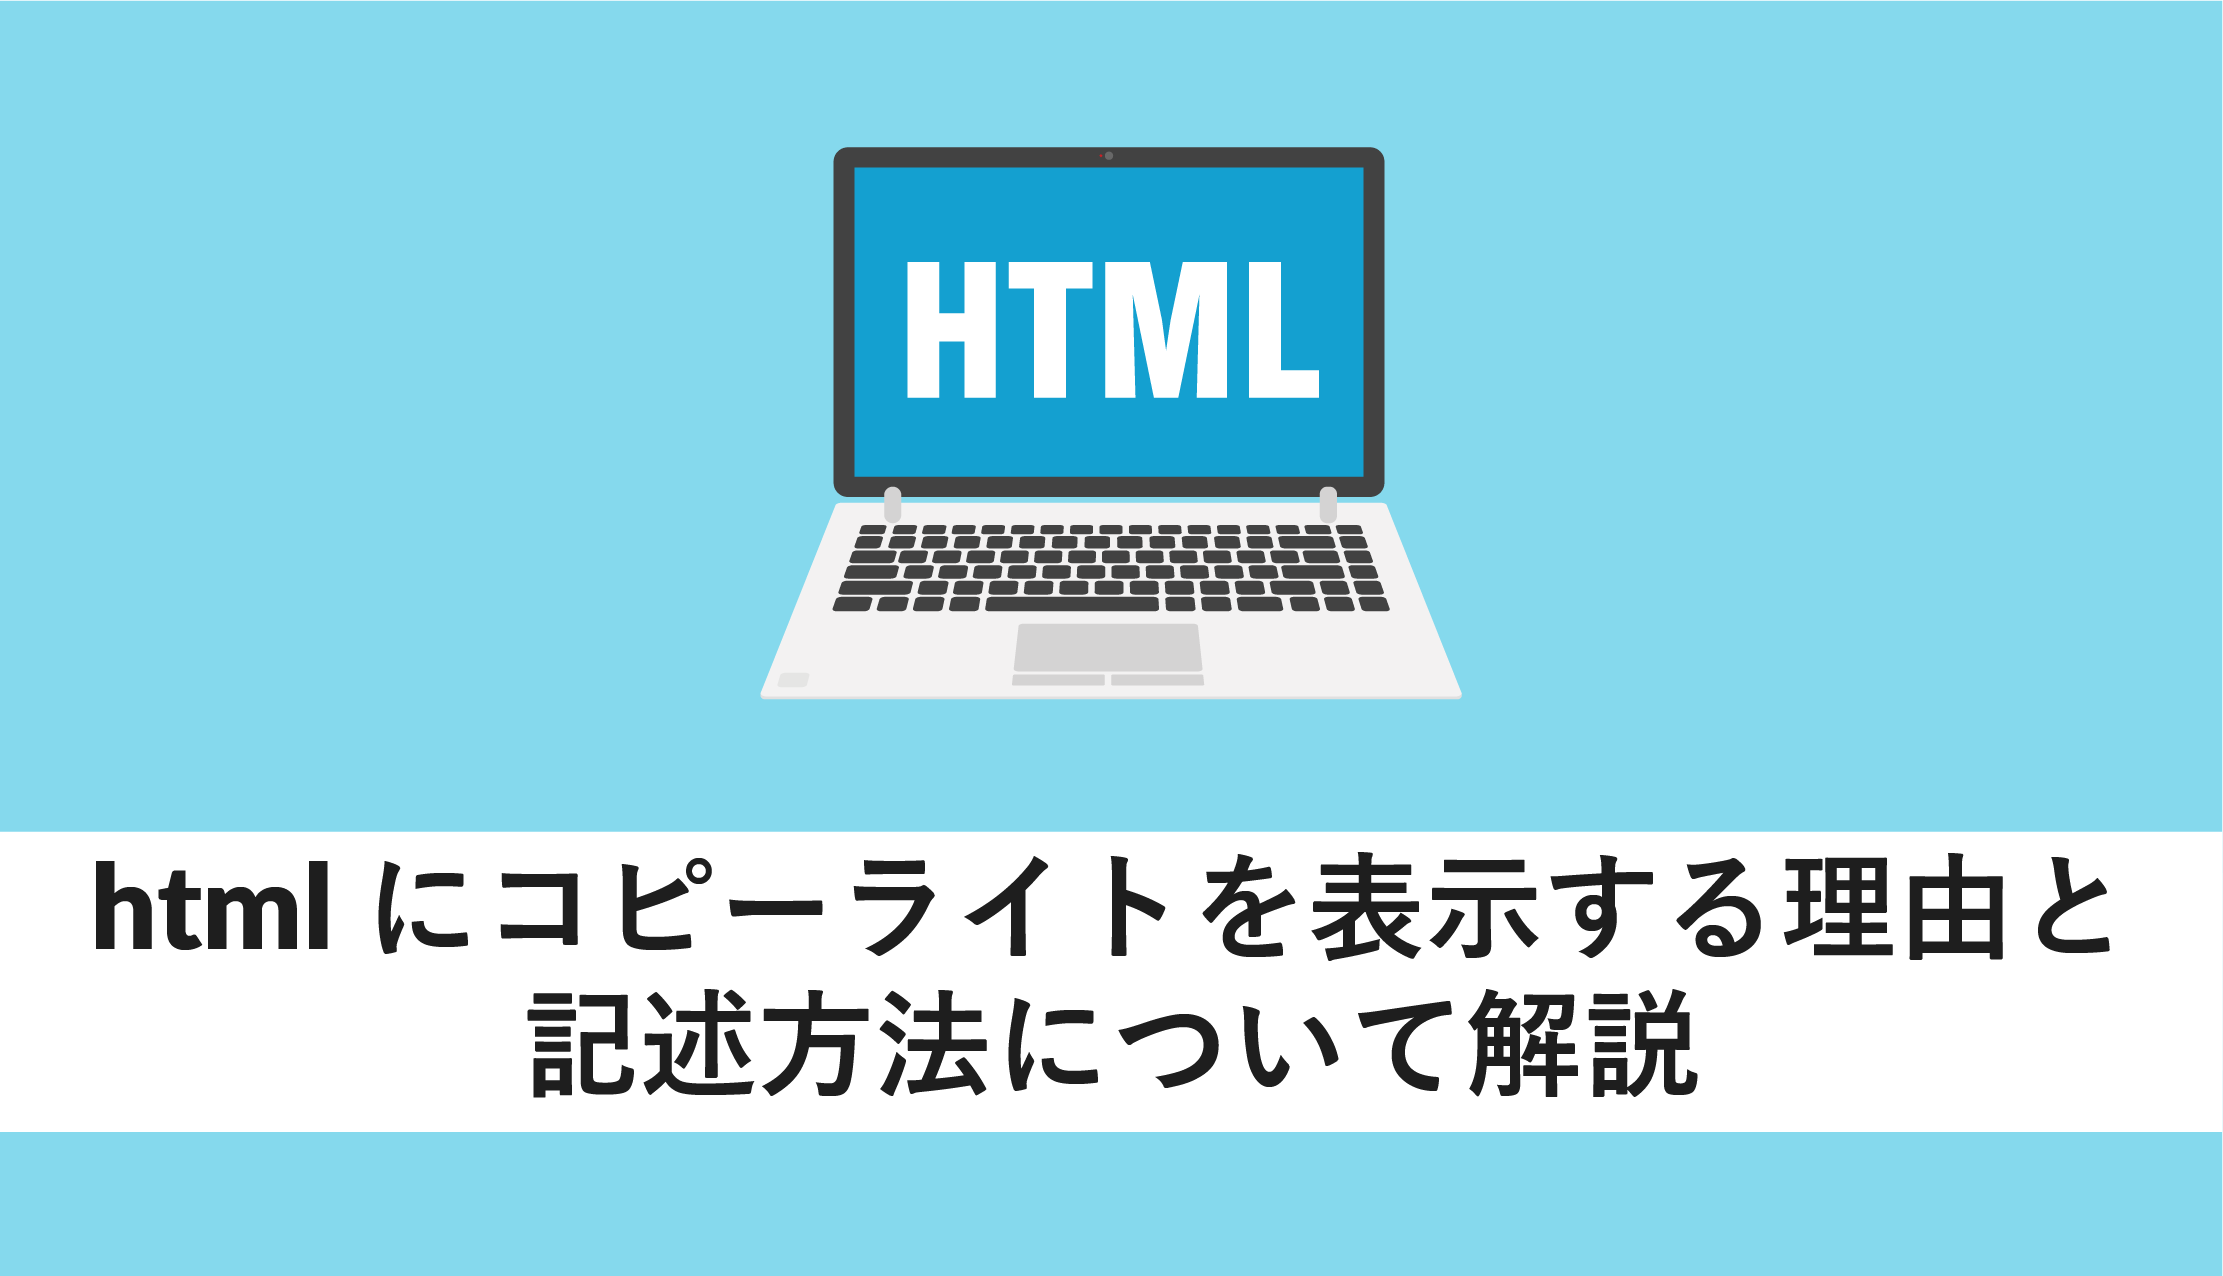 HTMLにコピーライトを表示する理由と記述方法について解説